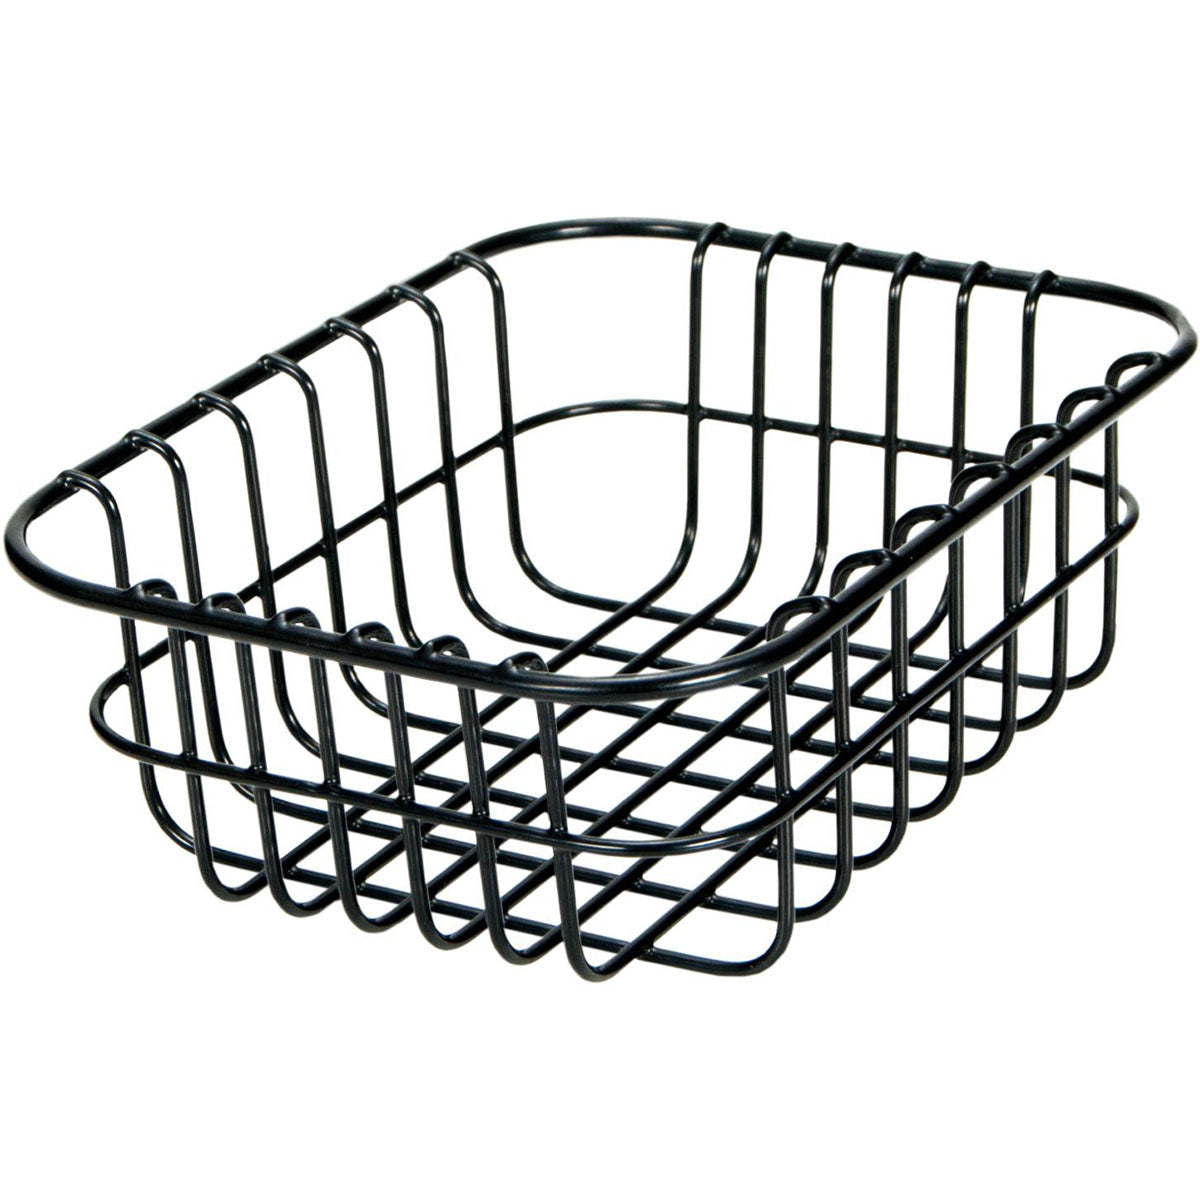 IGLOO Wire Basket for 20 qt. Rotomold and IMX 24 qt. Coolers - Black IGLOO